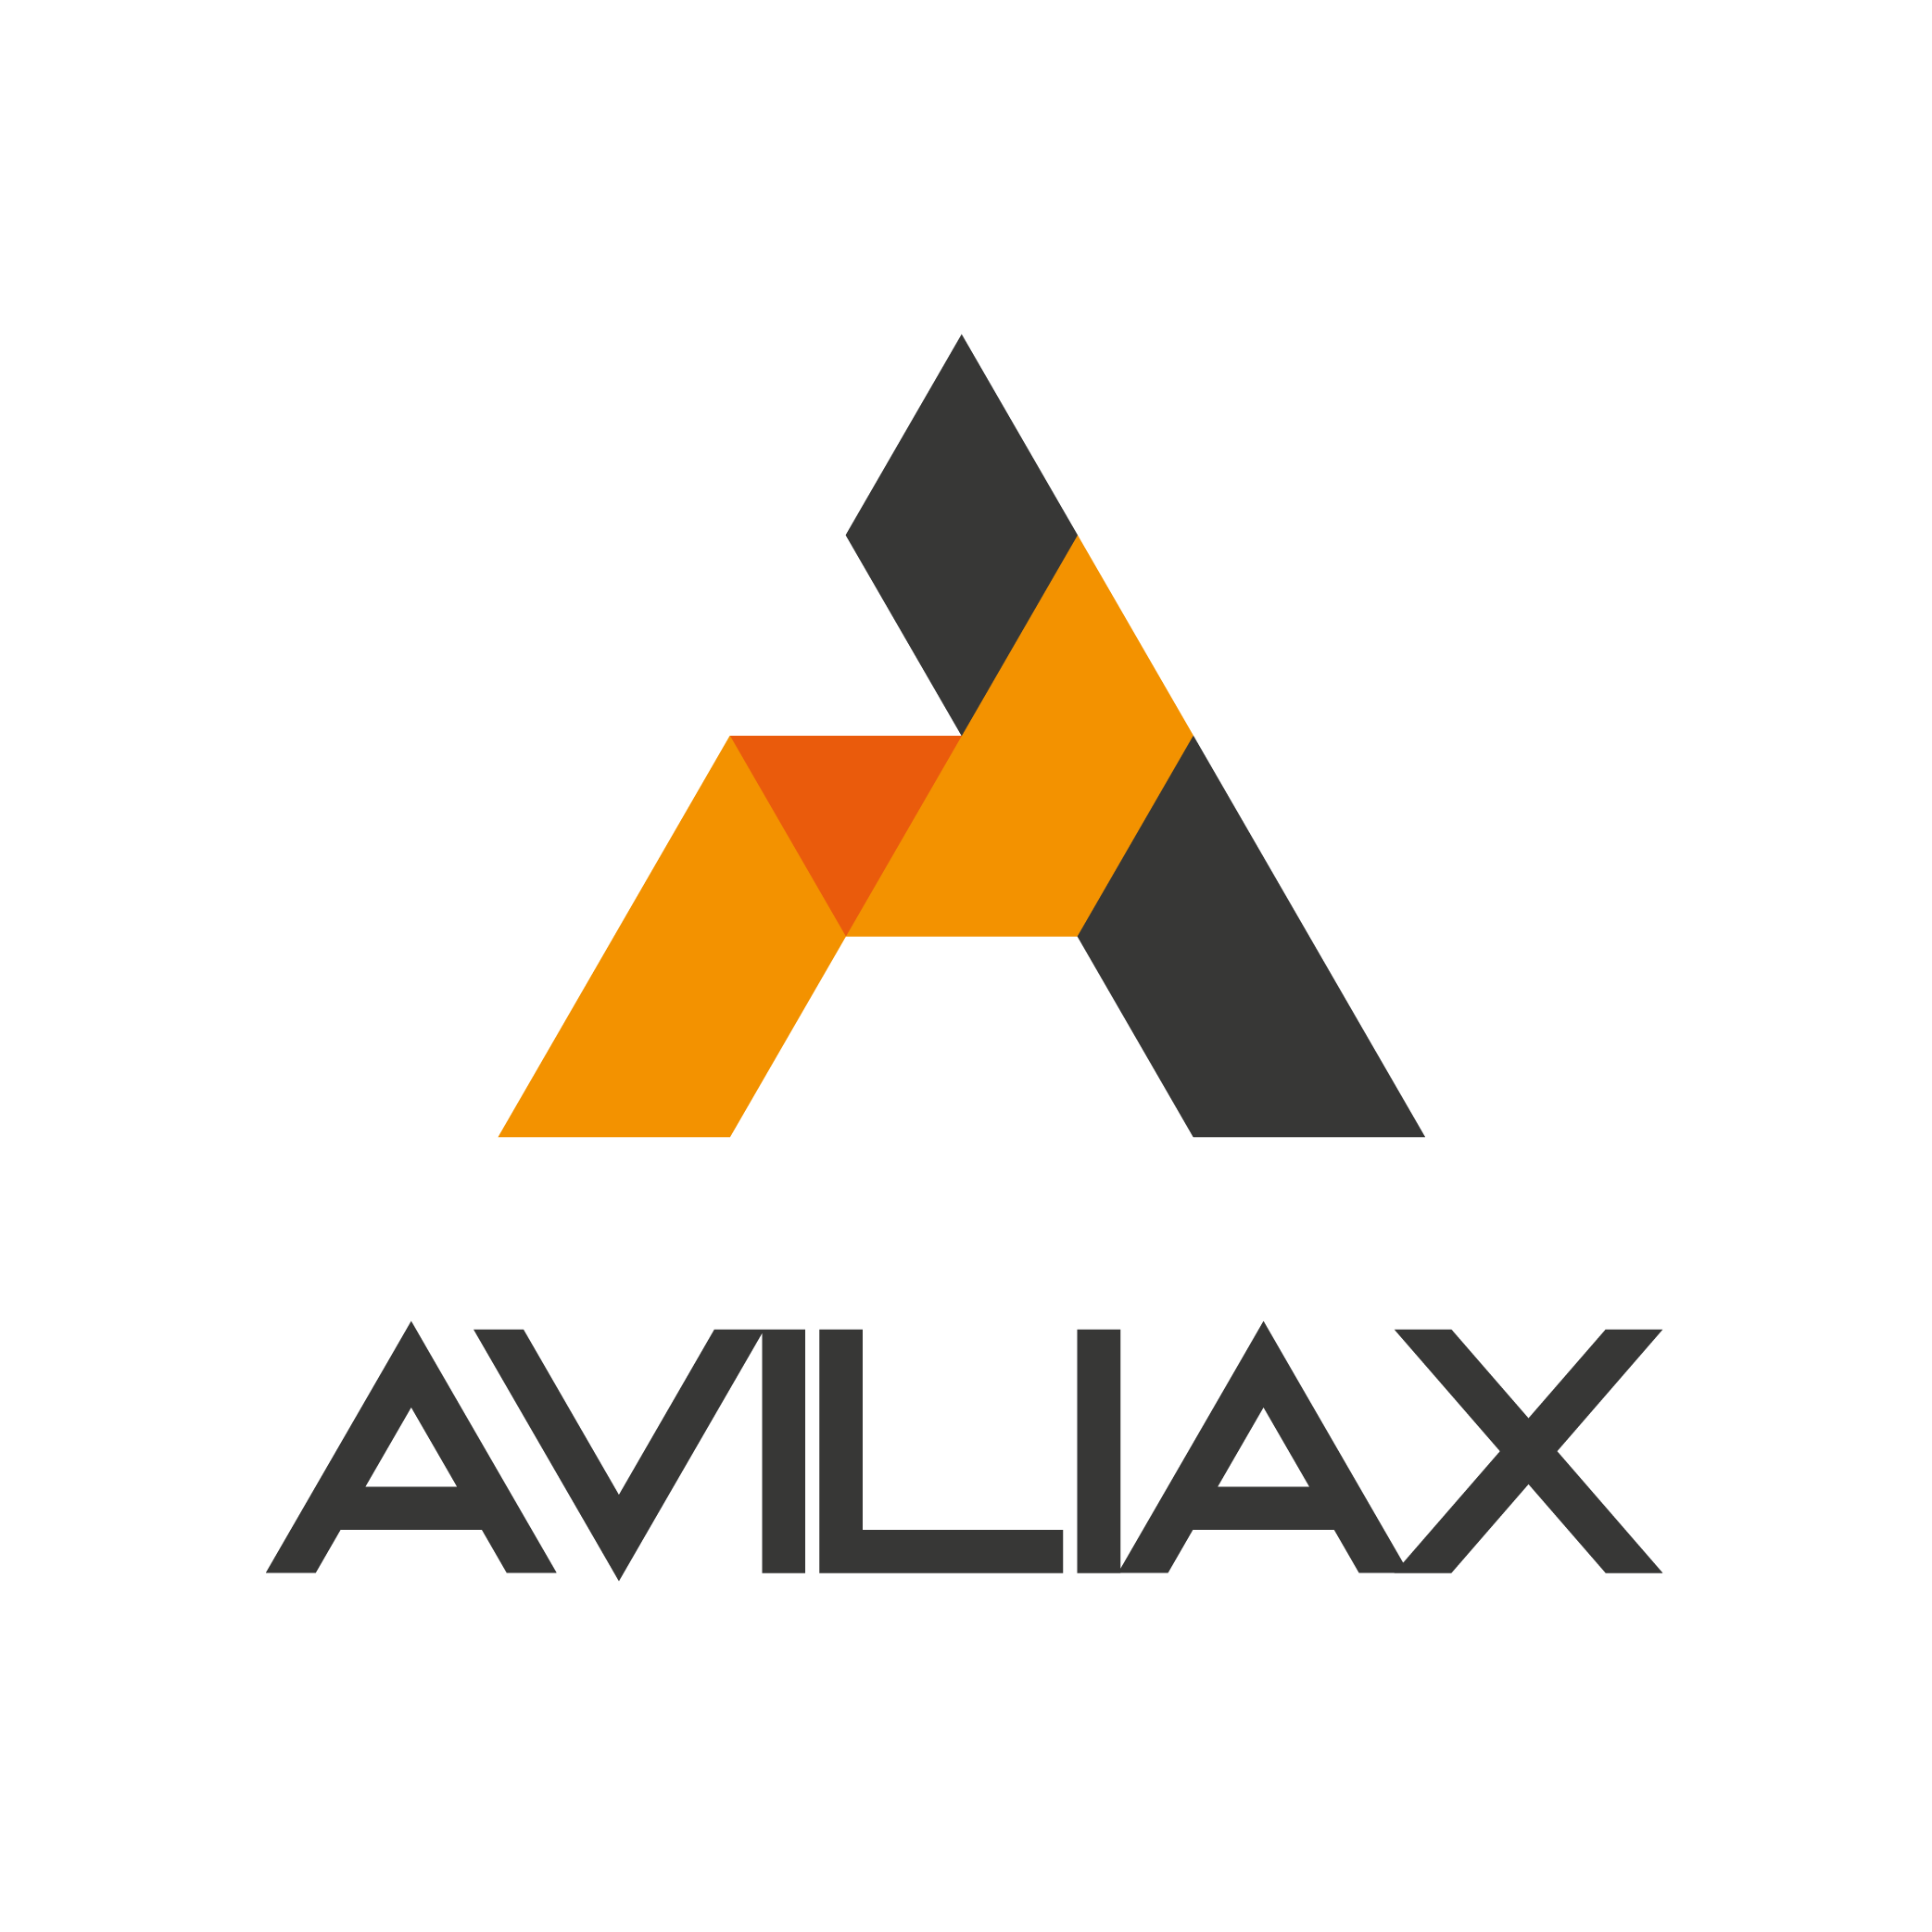 Aviliax